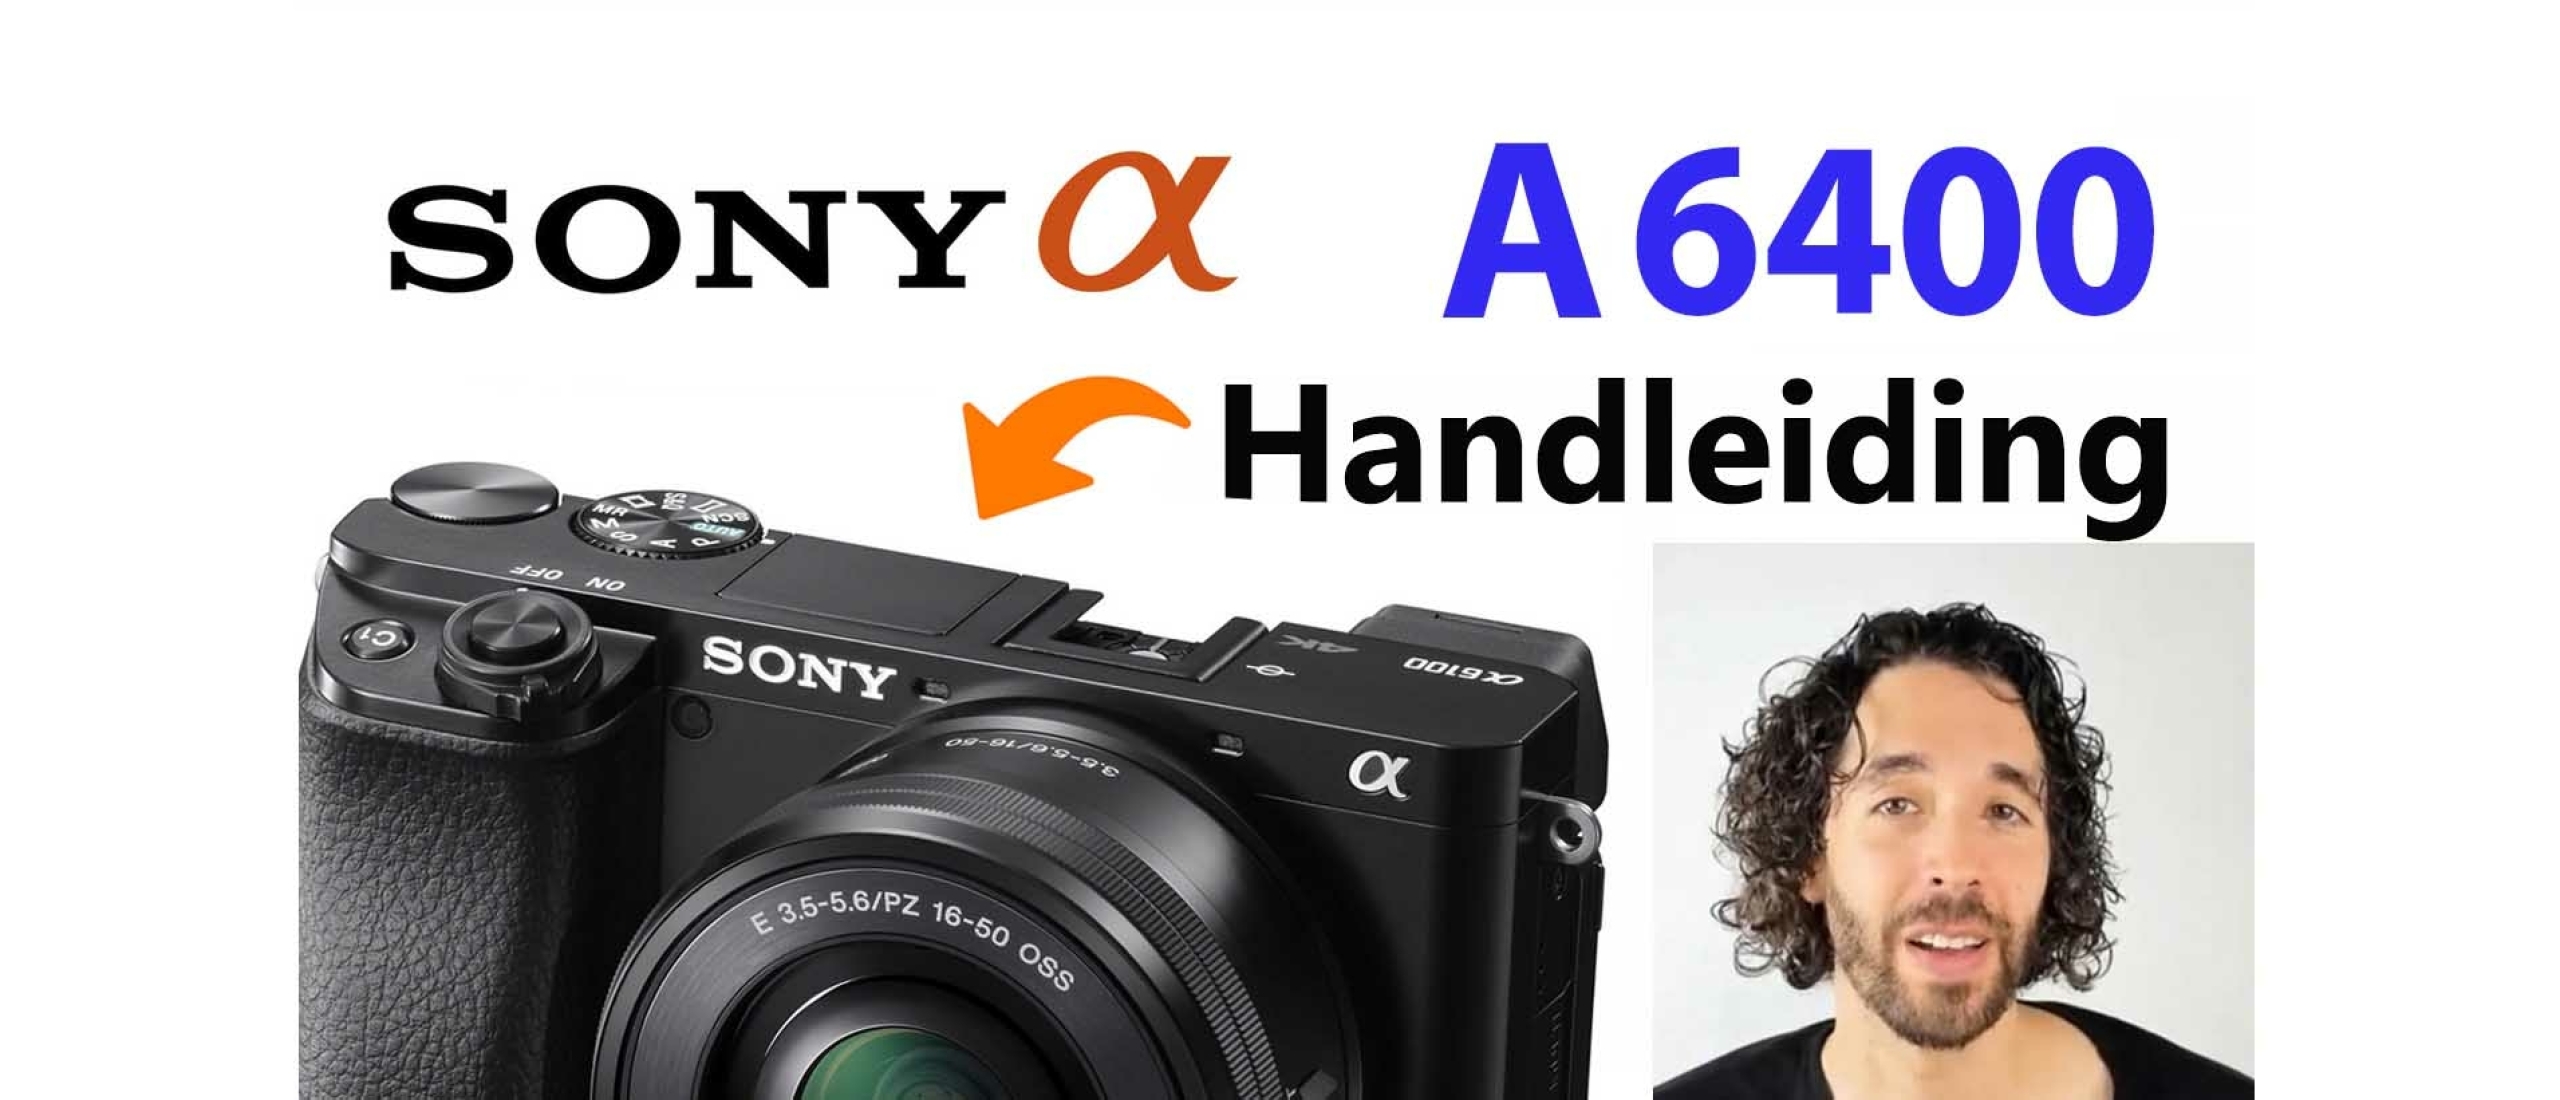 Sony A6400 Camera Handleiding: Instellingen, menu, functies en knoppen